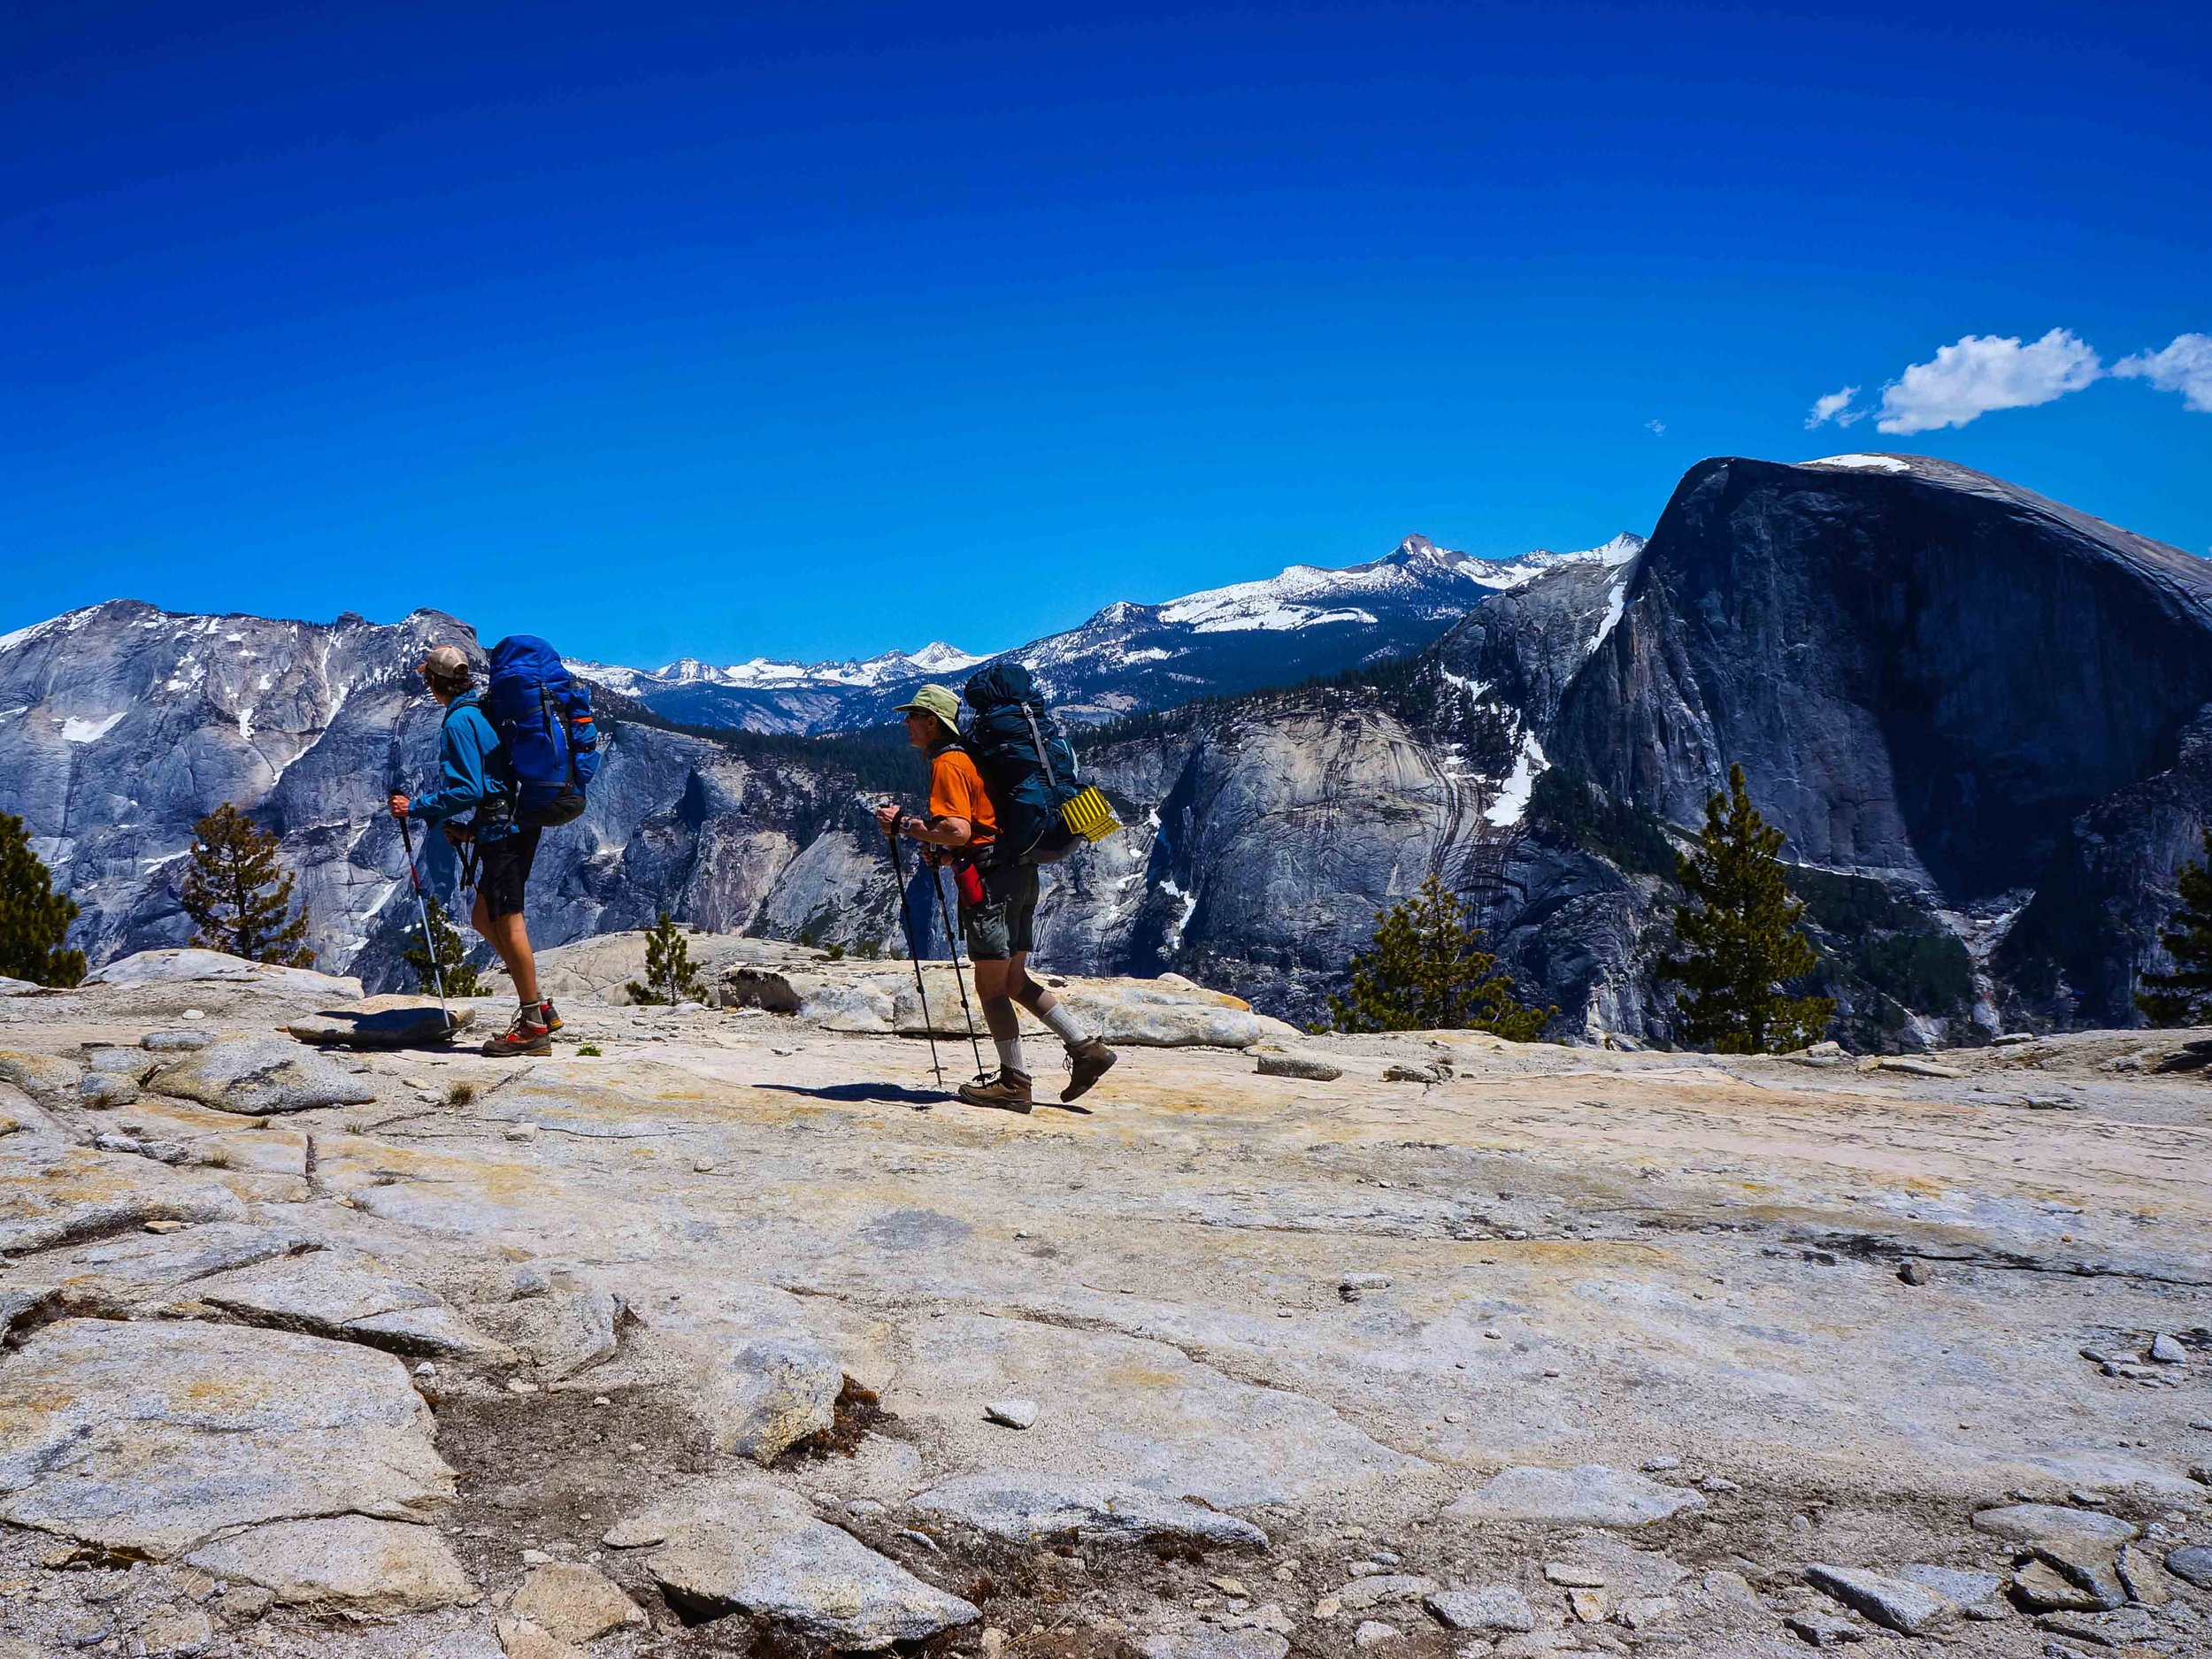 Summer snow in Yosemite and the Sierra Nevada — International